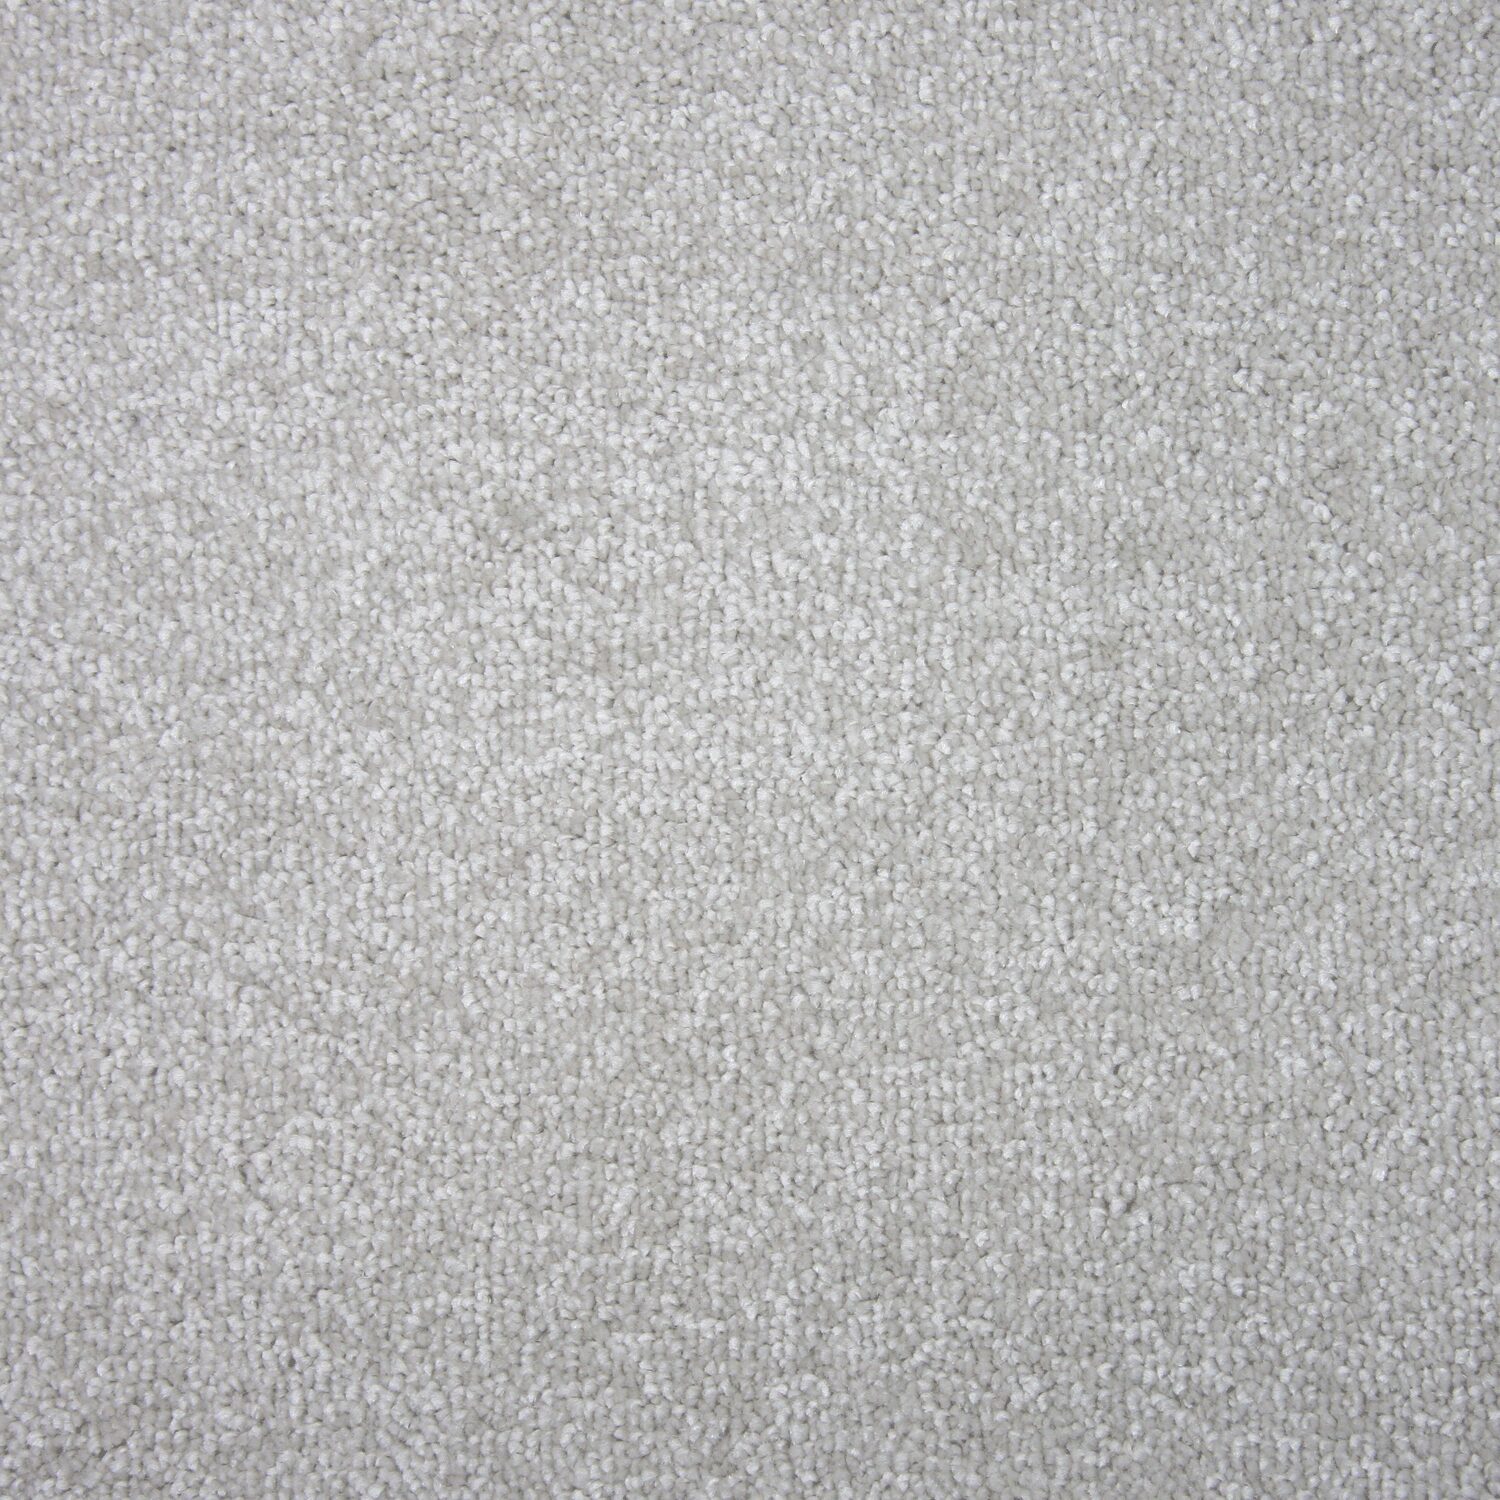 Carpet name: Smart Christchurch Bleached White